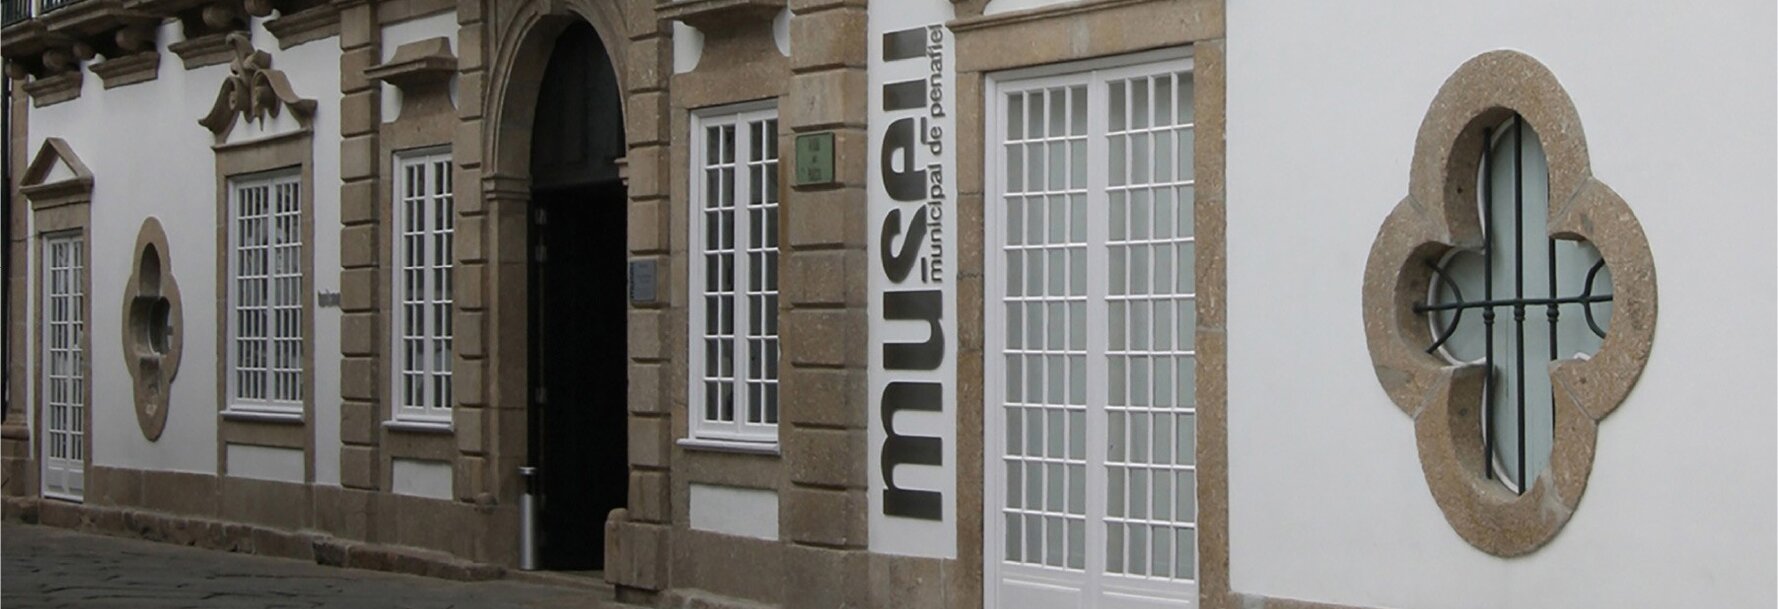 O museu